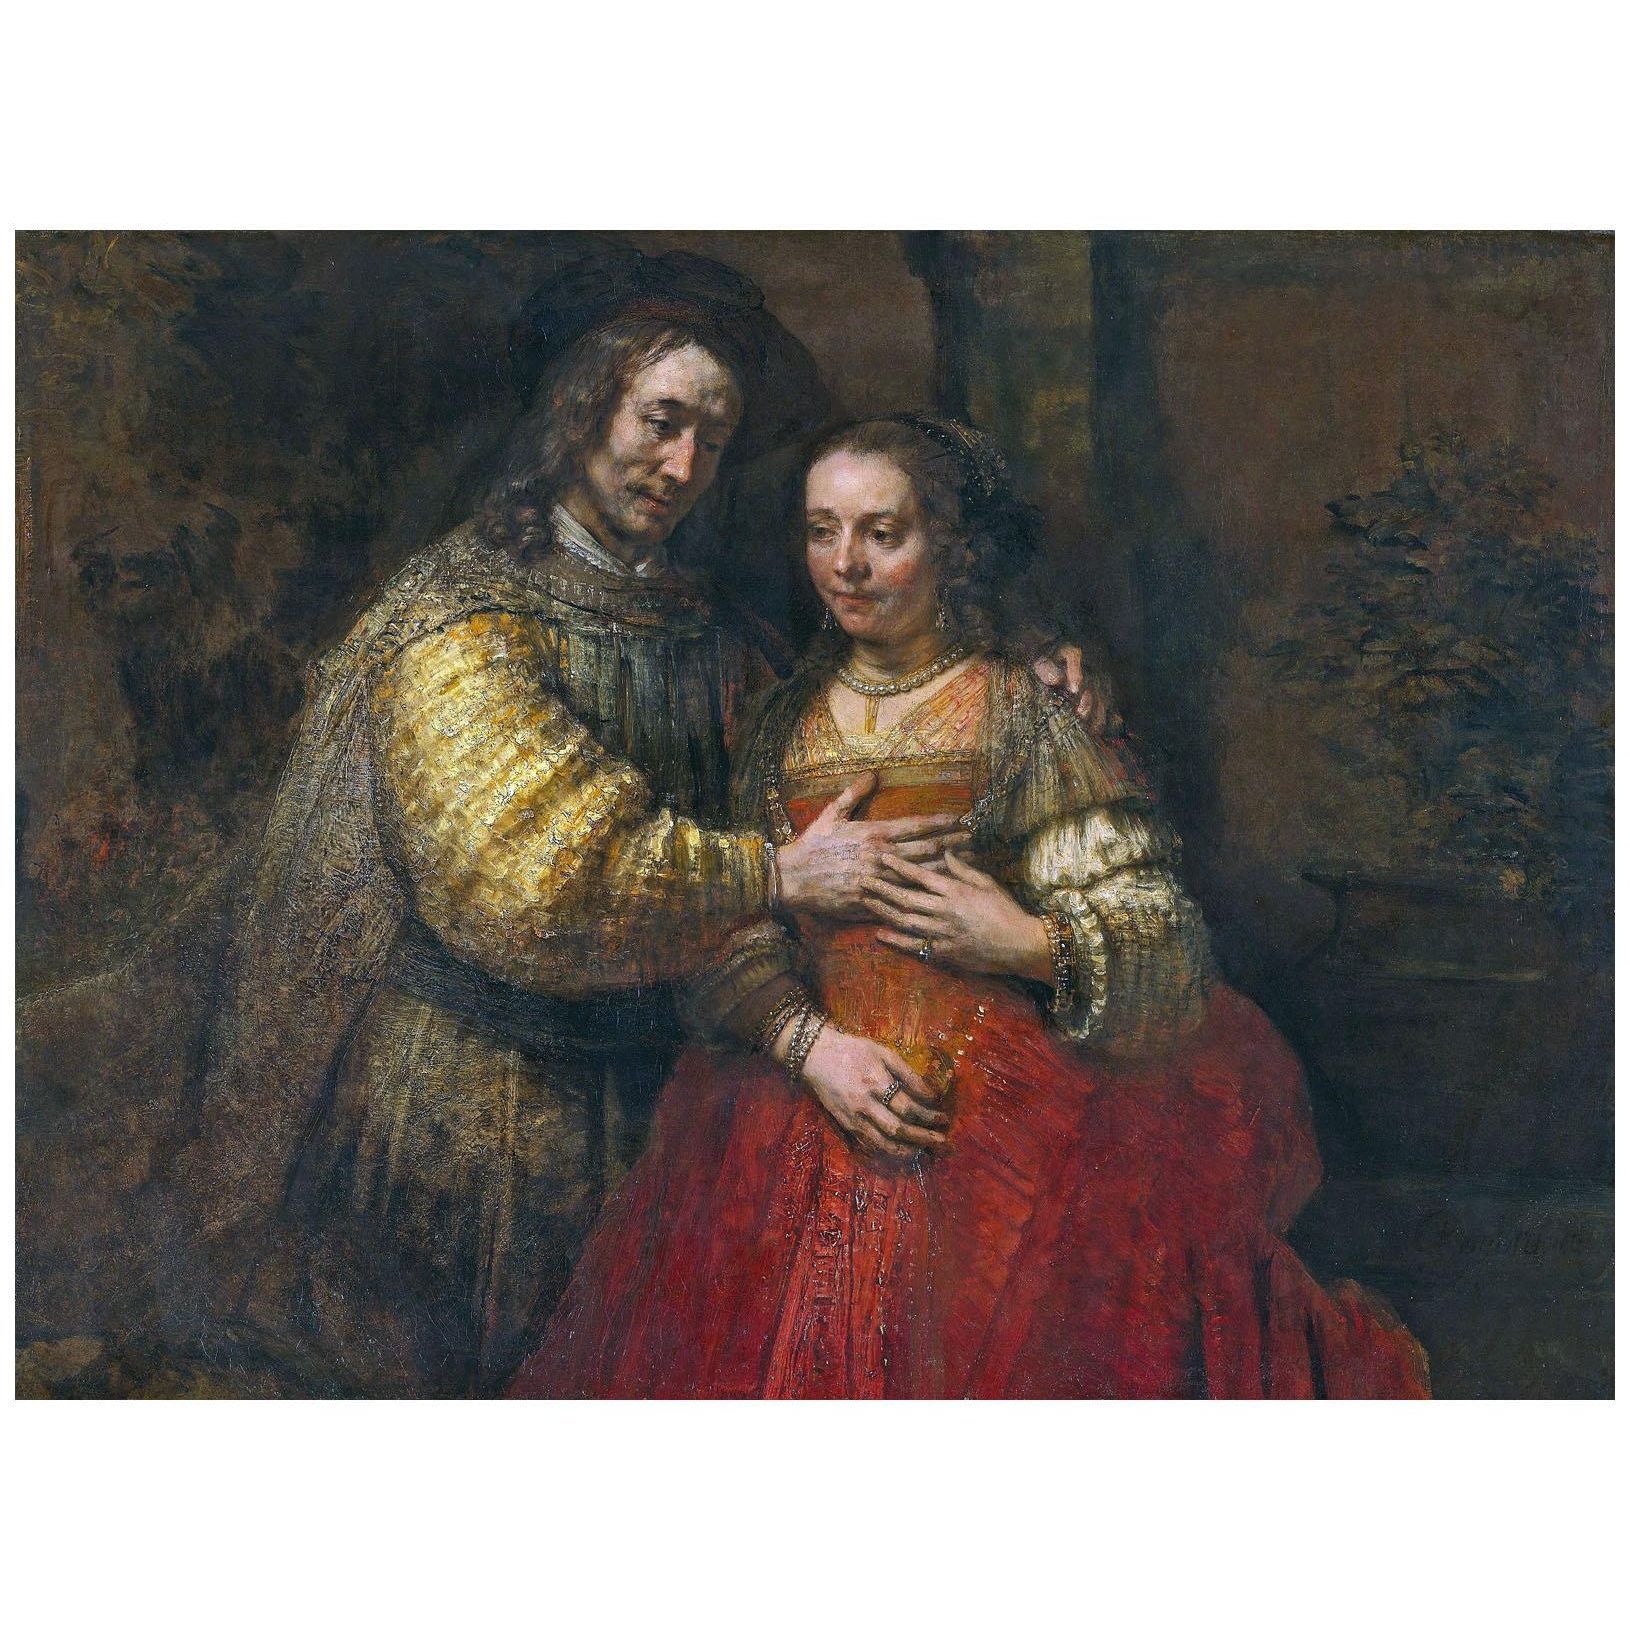 Rembrandt. The Jewish Bride. 1665. Rijksmuseum Amsterdam